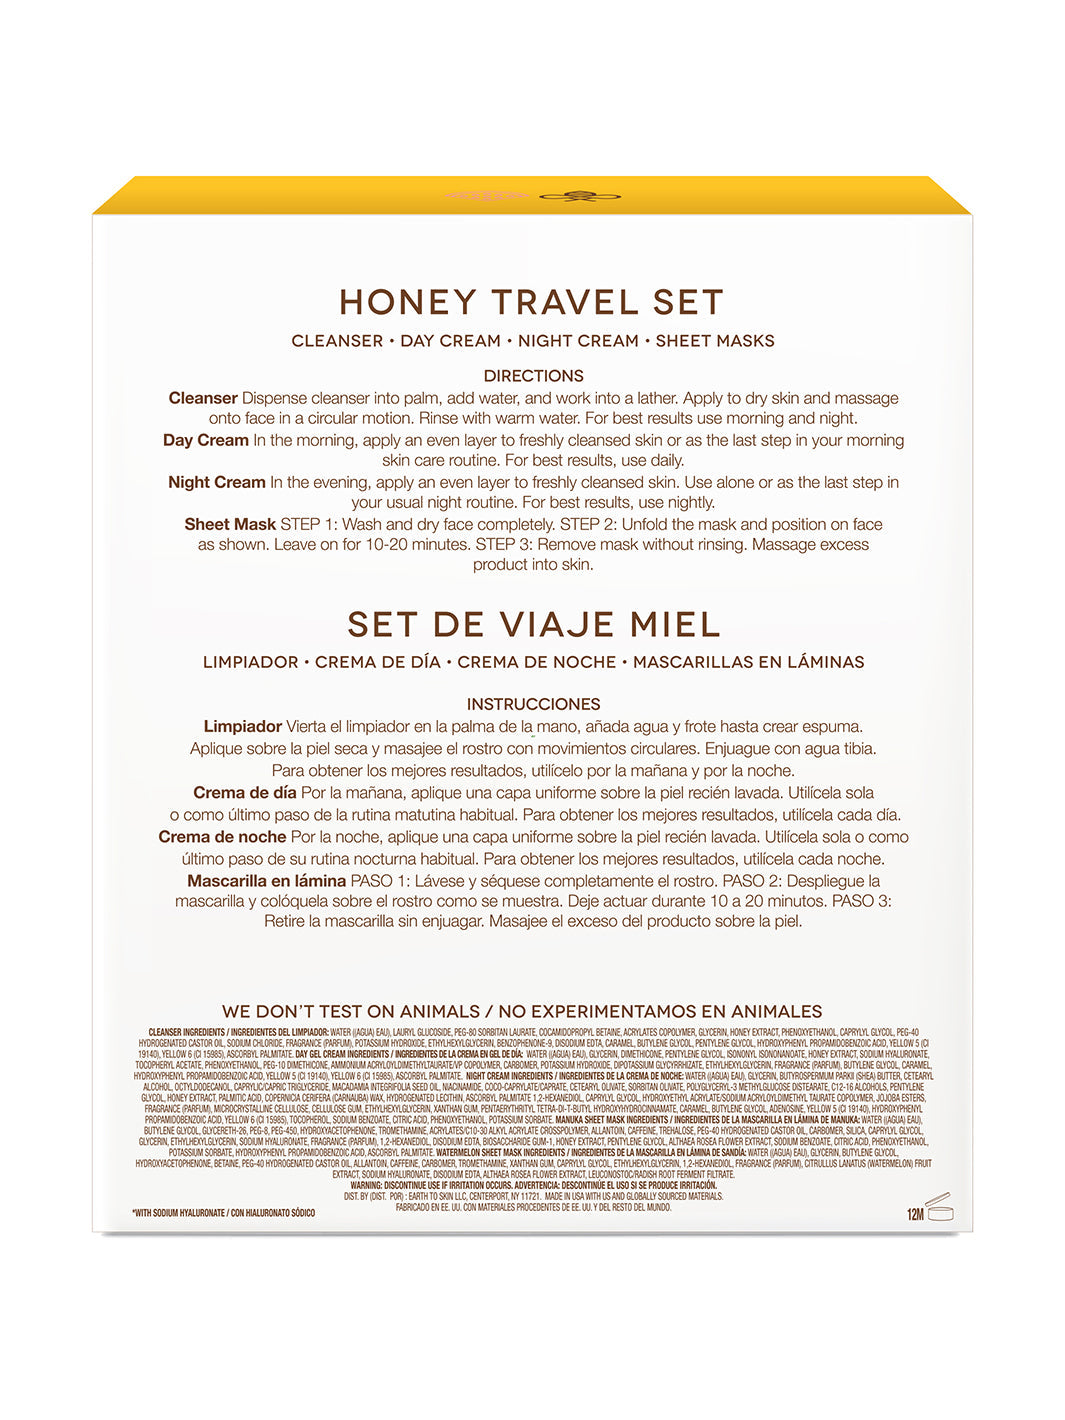 Honey Travel Set by EarthToSkin